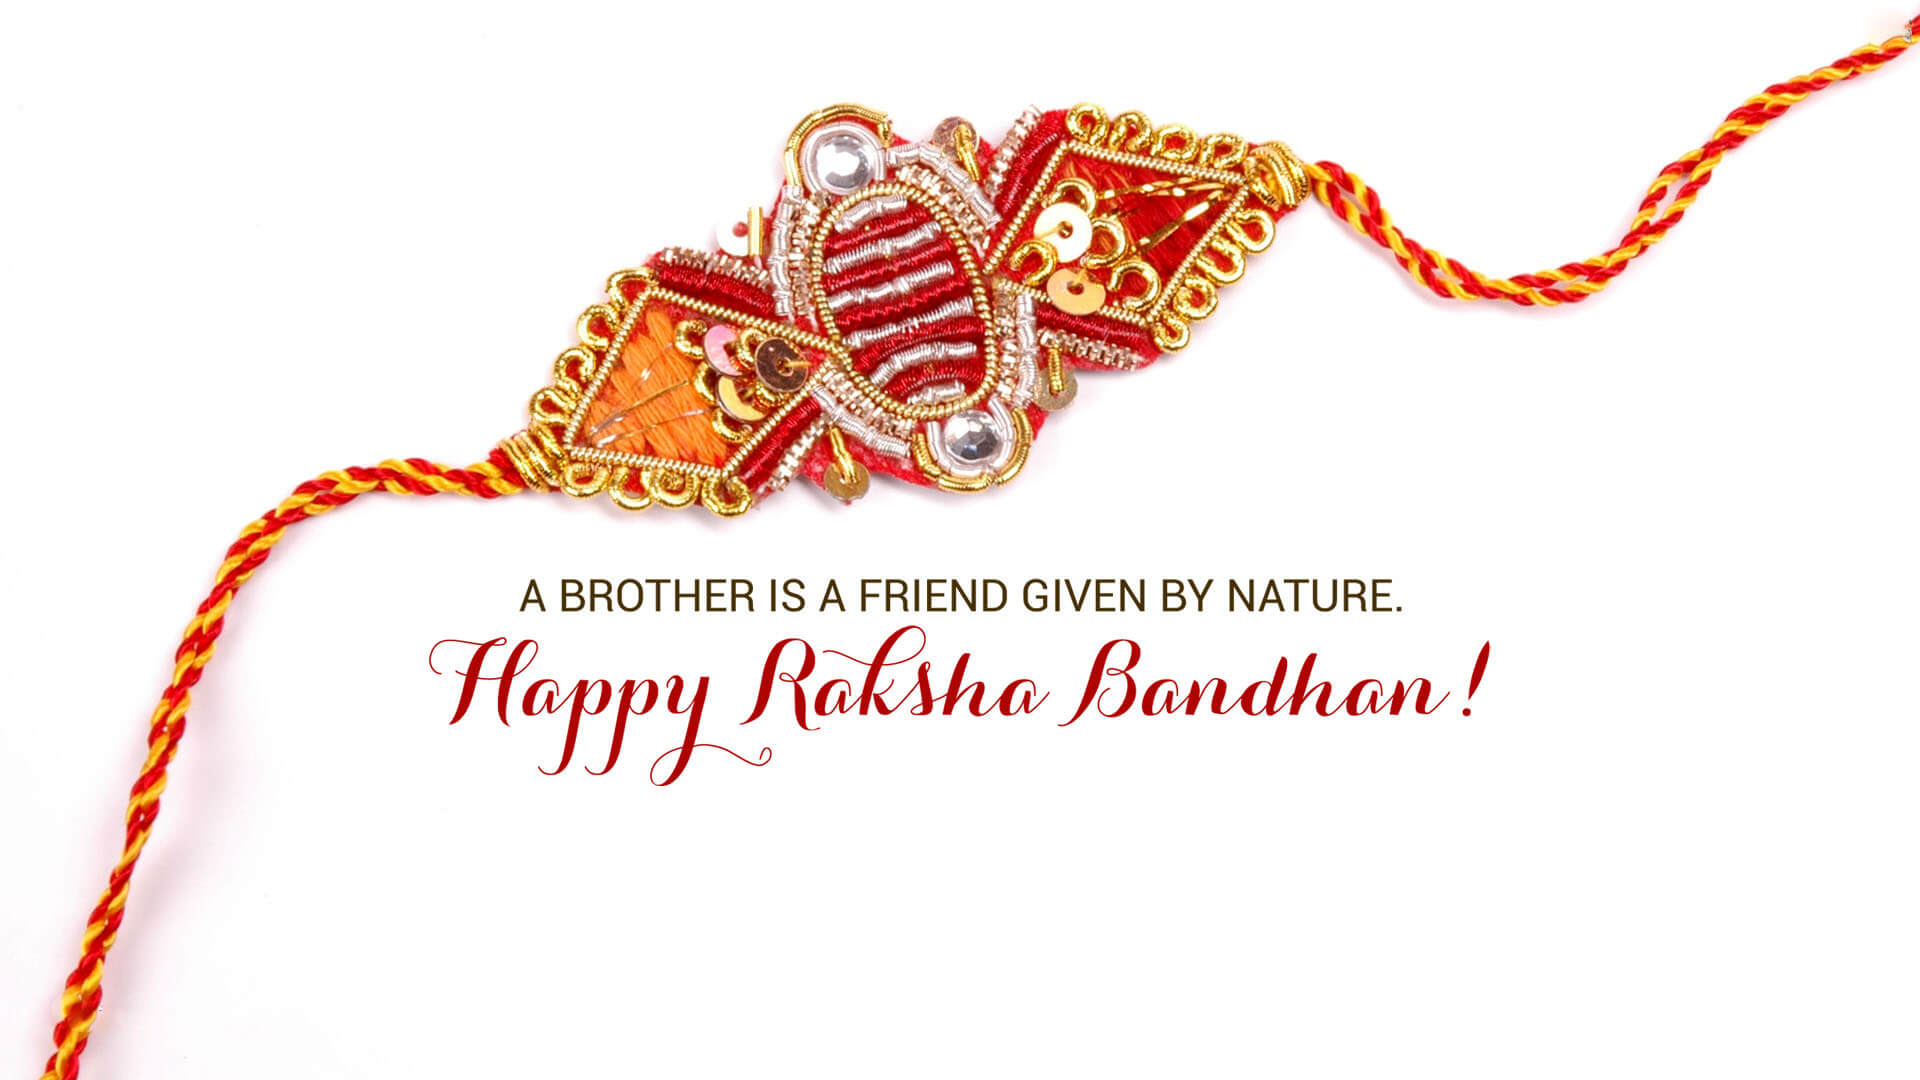 Happy Raksha Bandhan wishes images for brother